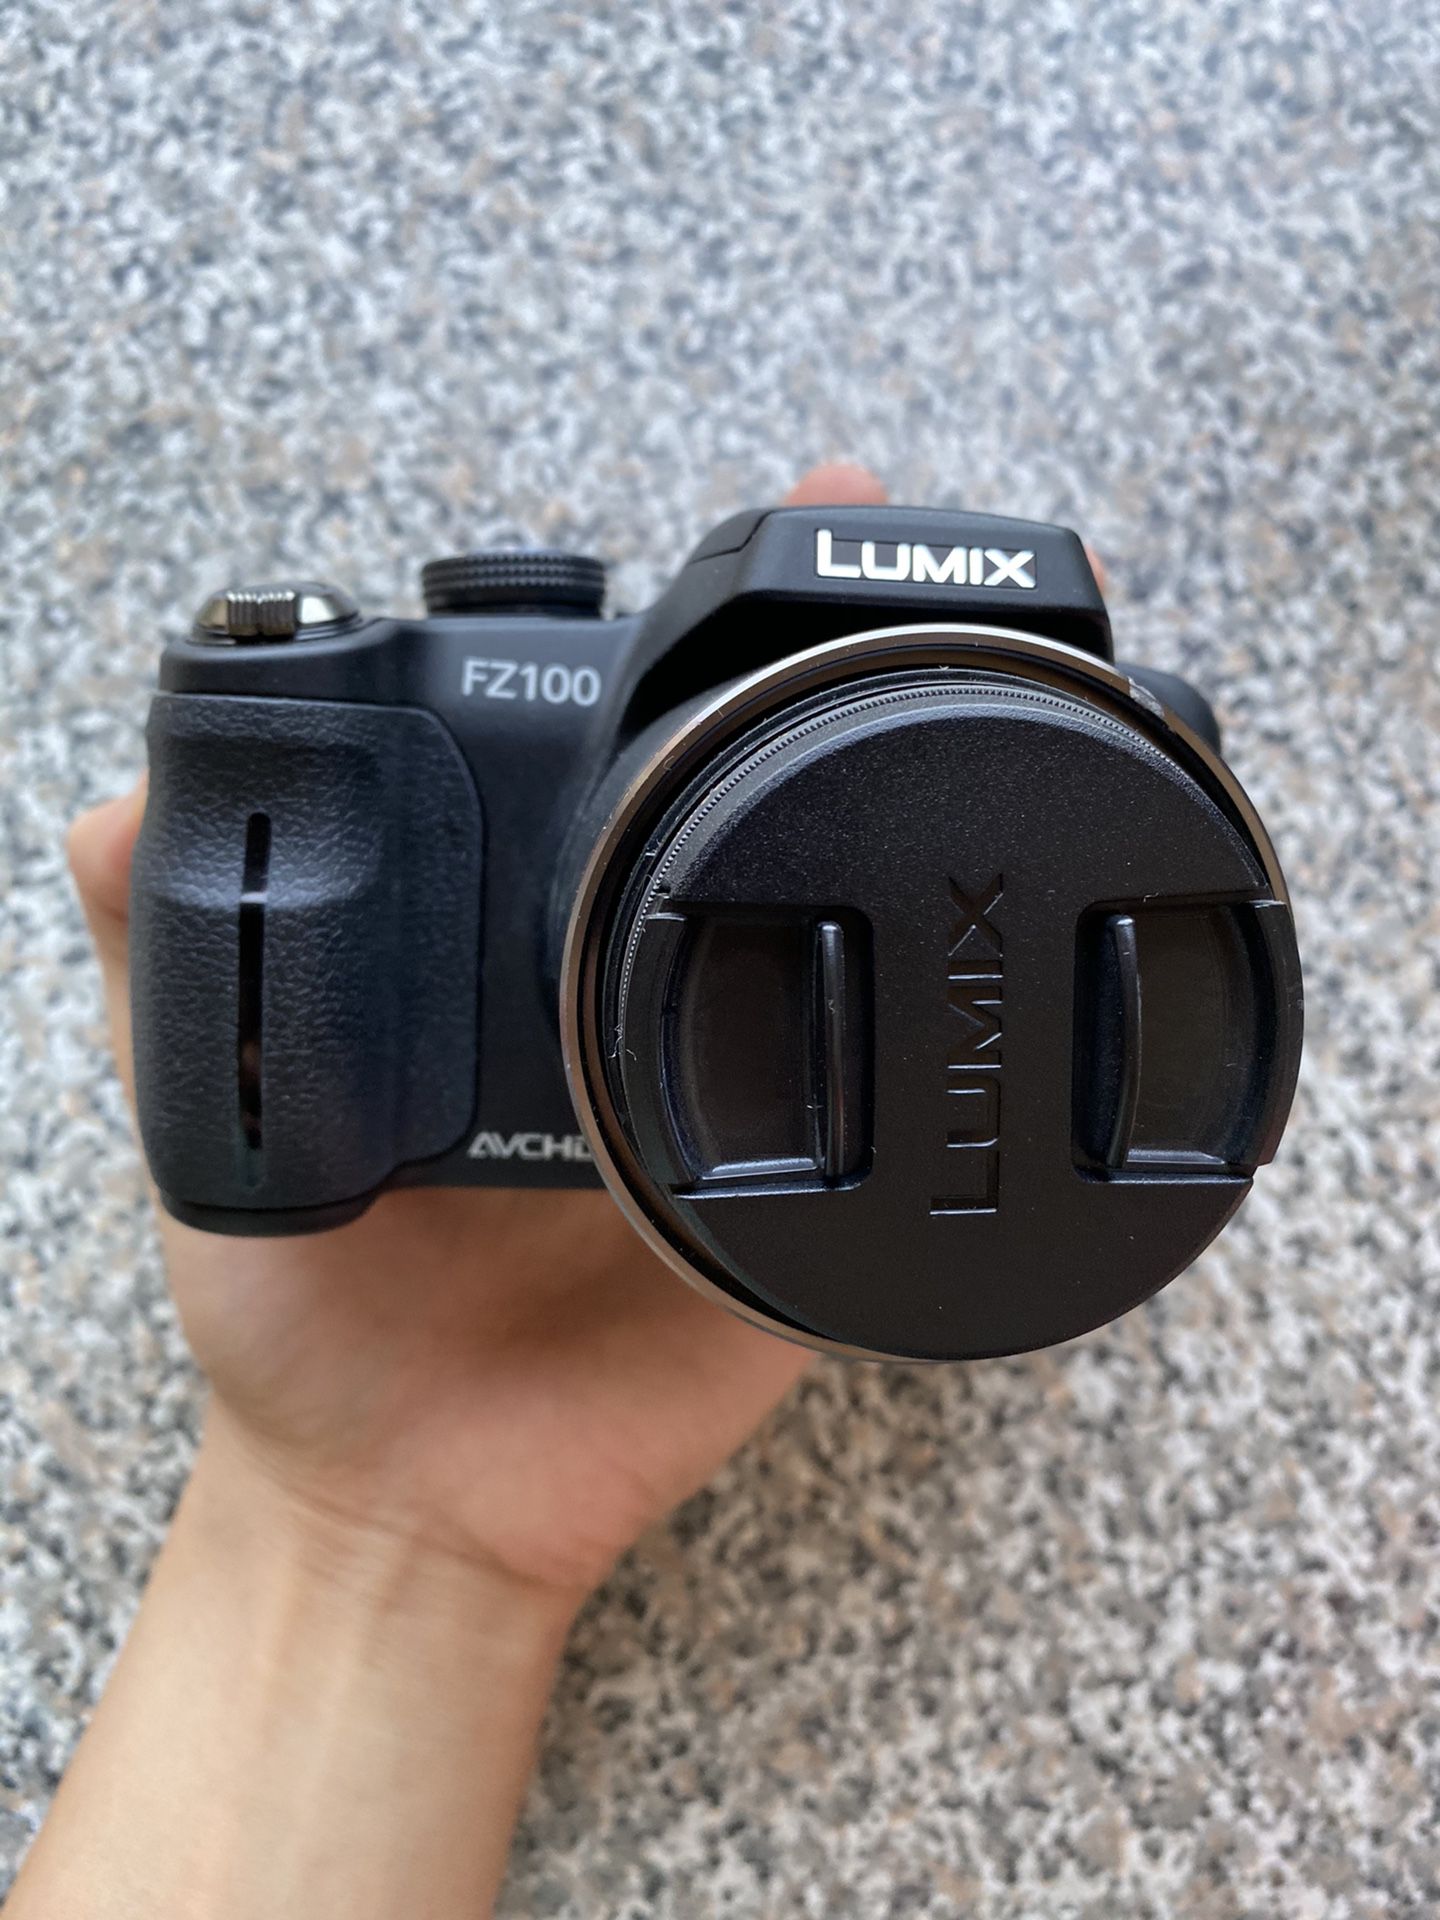 Panasonic lumix DMC-FZ100 14.1MP digital camera